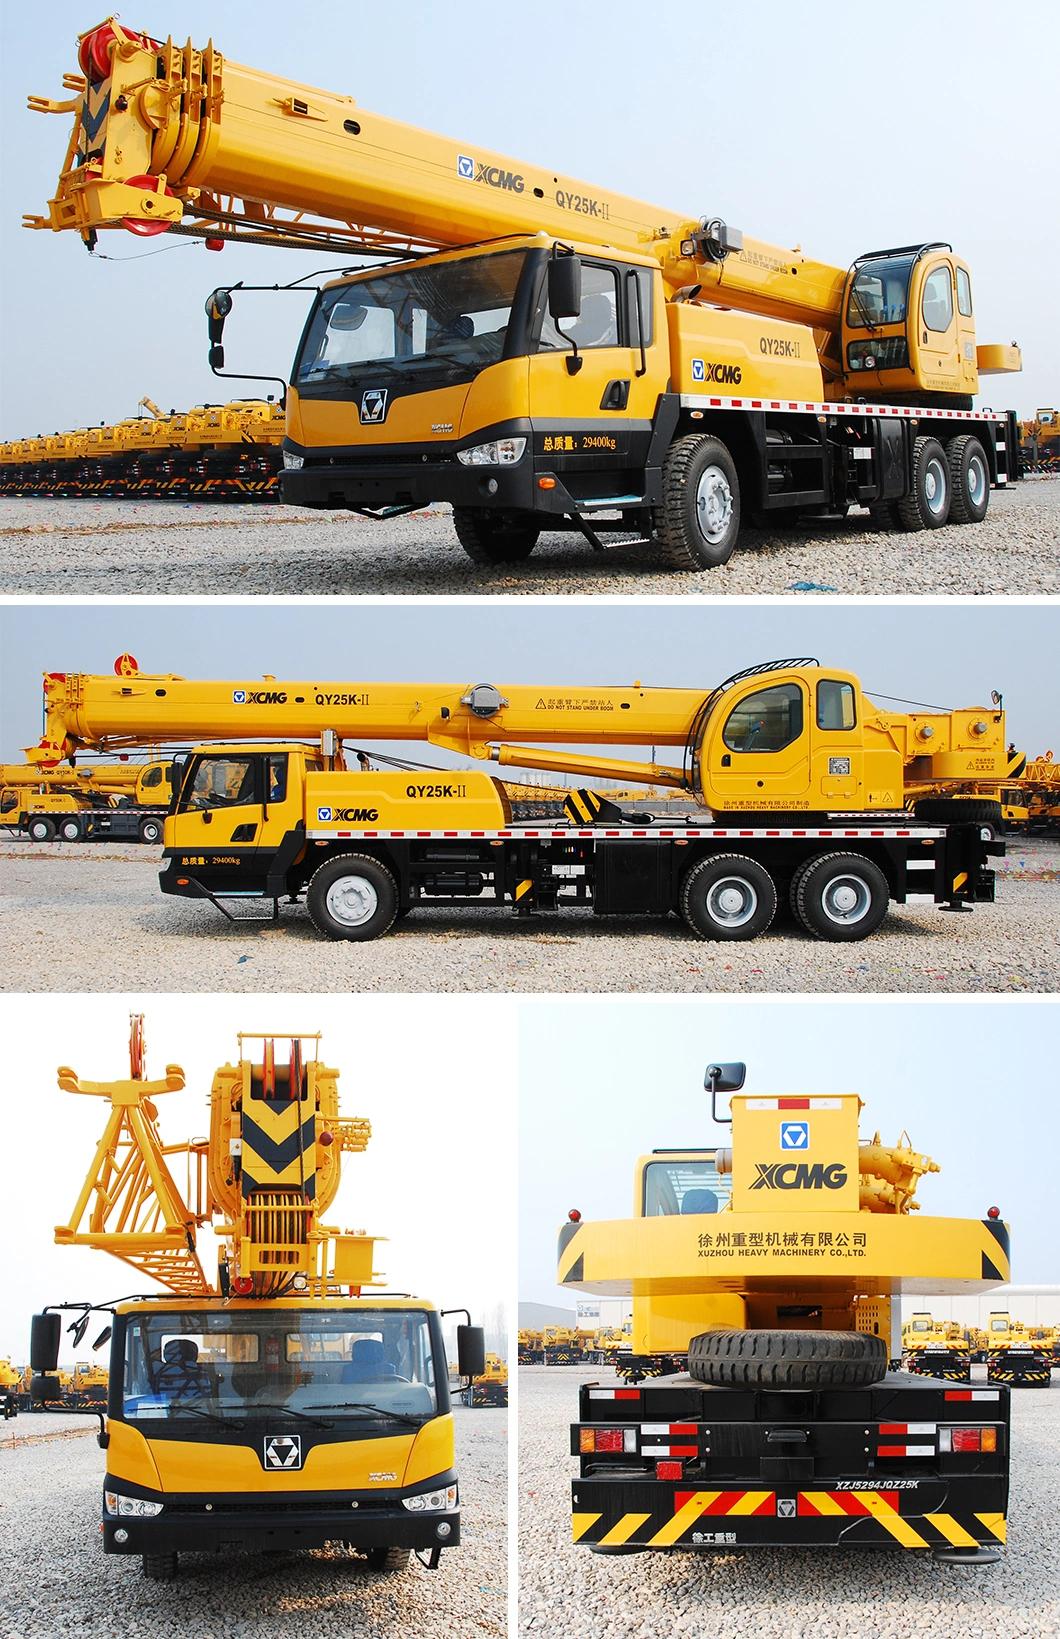 XCMG Qy25K Crane 25 Tonne China Mobile Construction Crane for Sale